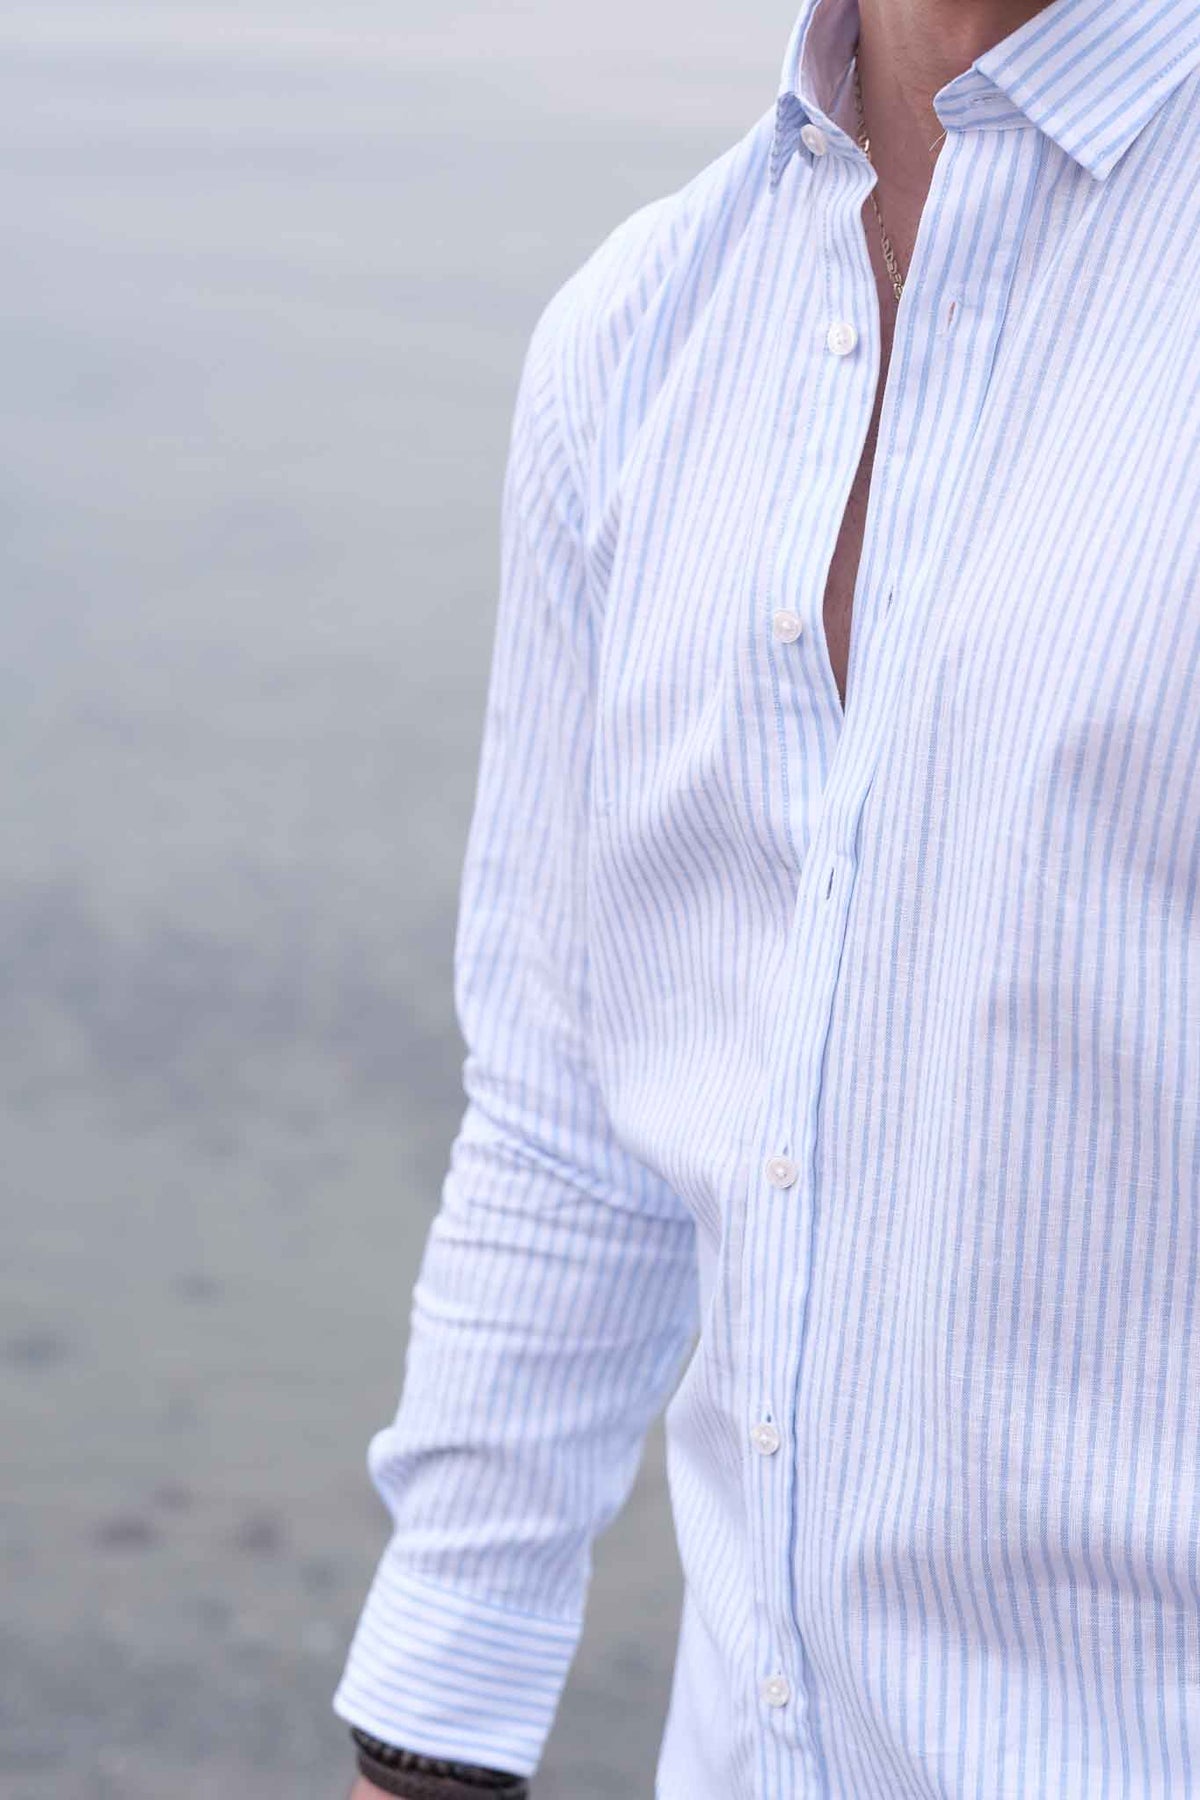 Linen shirt with stripes in light blue (Art. 2262-C)